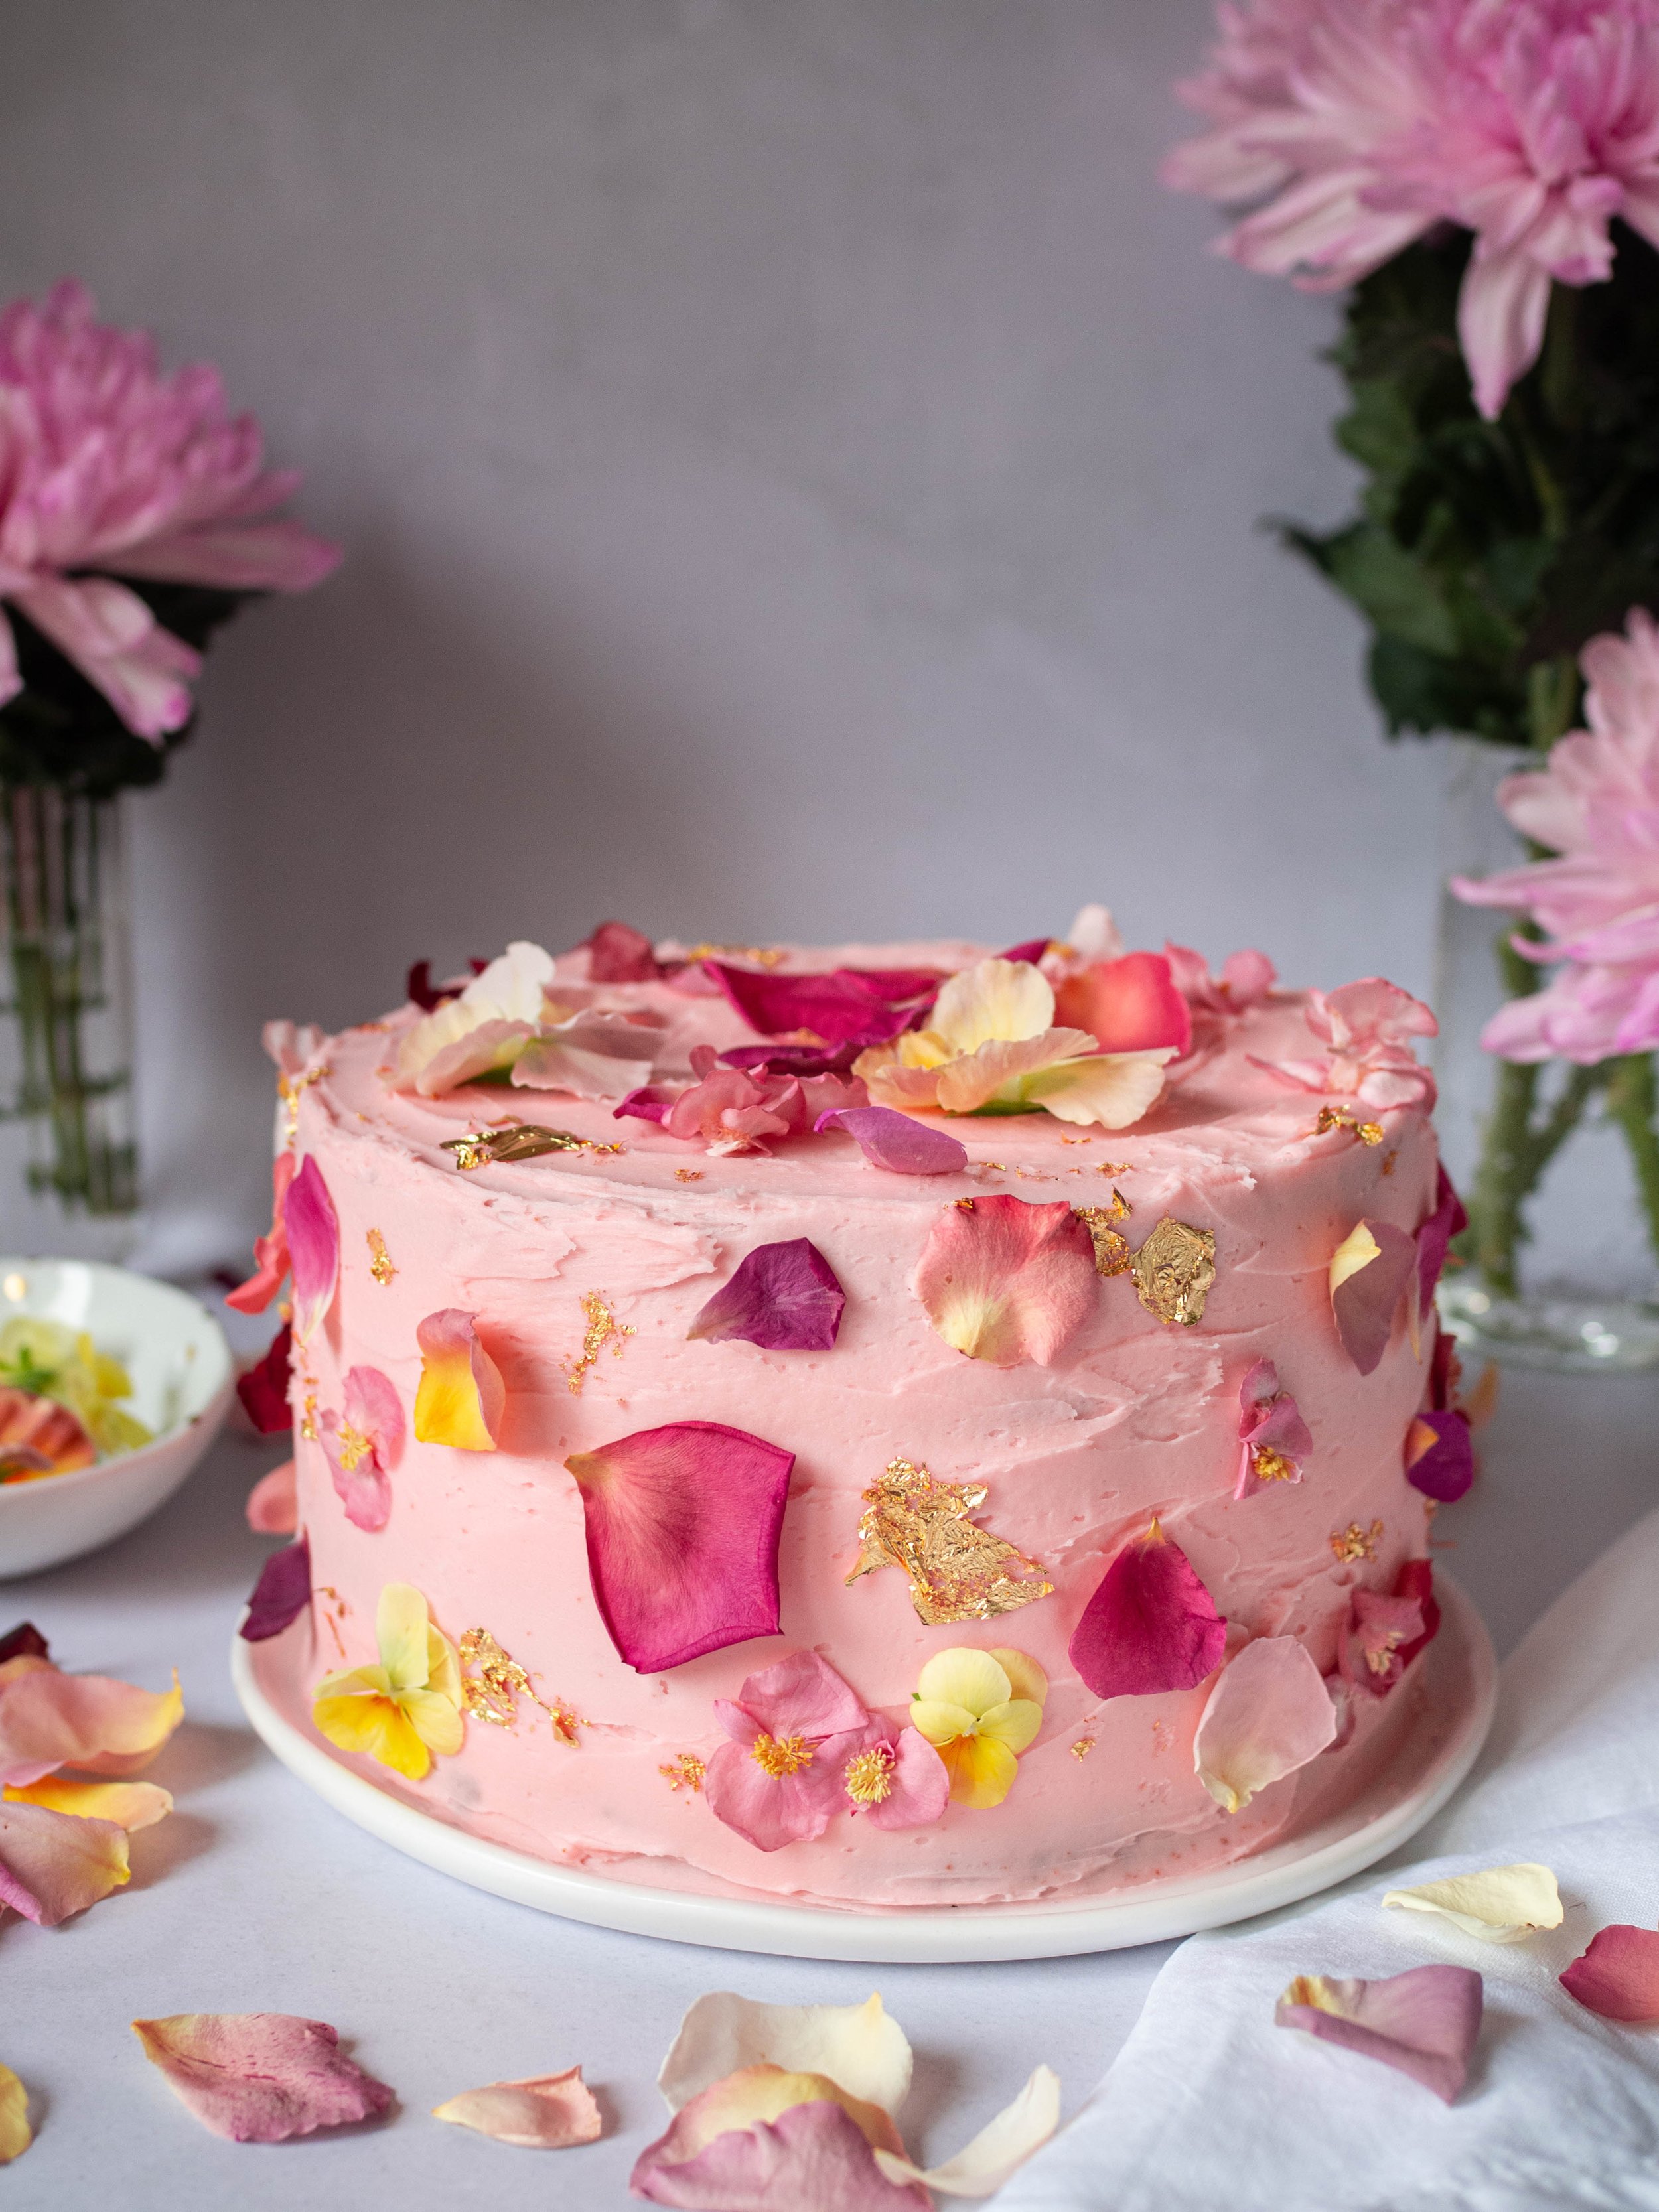 Let Them Eat Cake - A Marie Antoinette Inspired Layer Cake ...